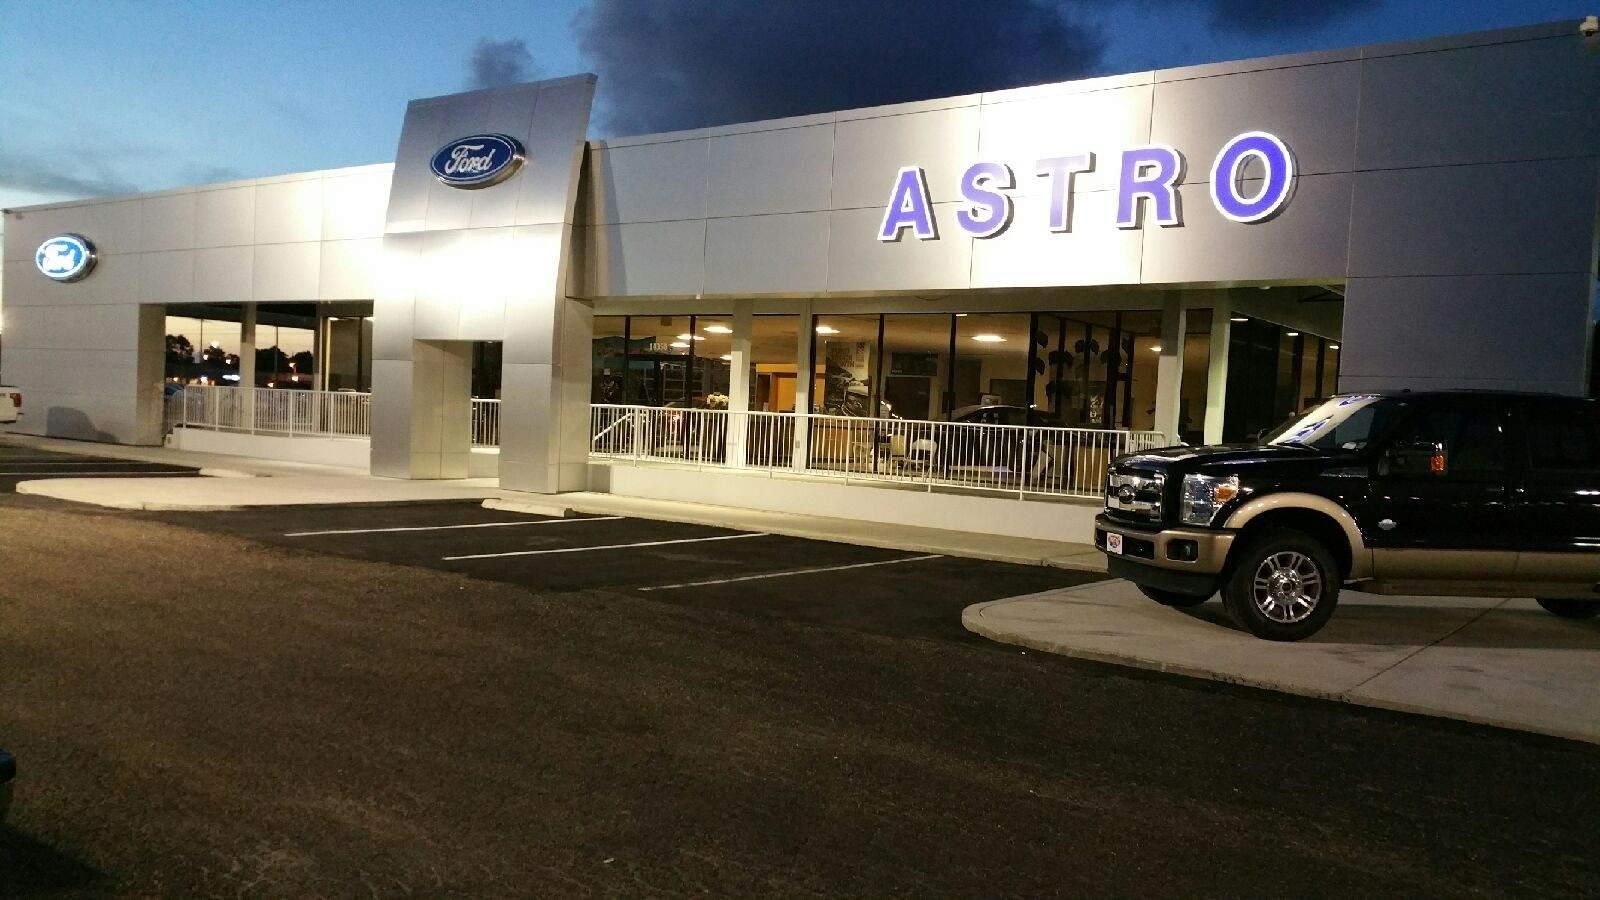 Astro Ford